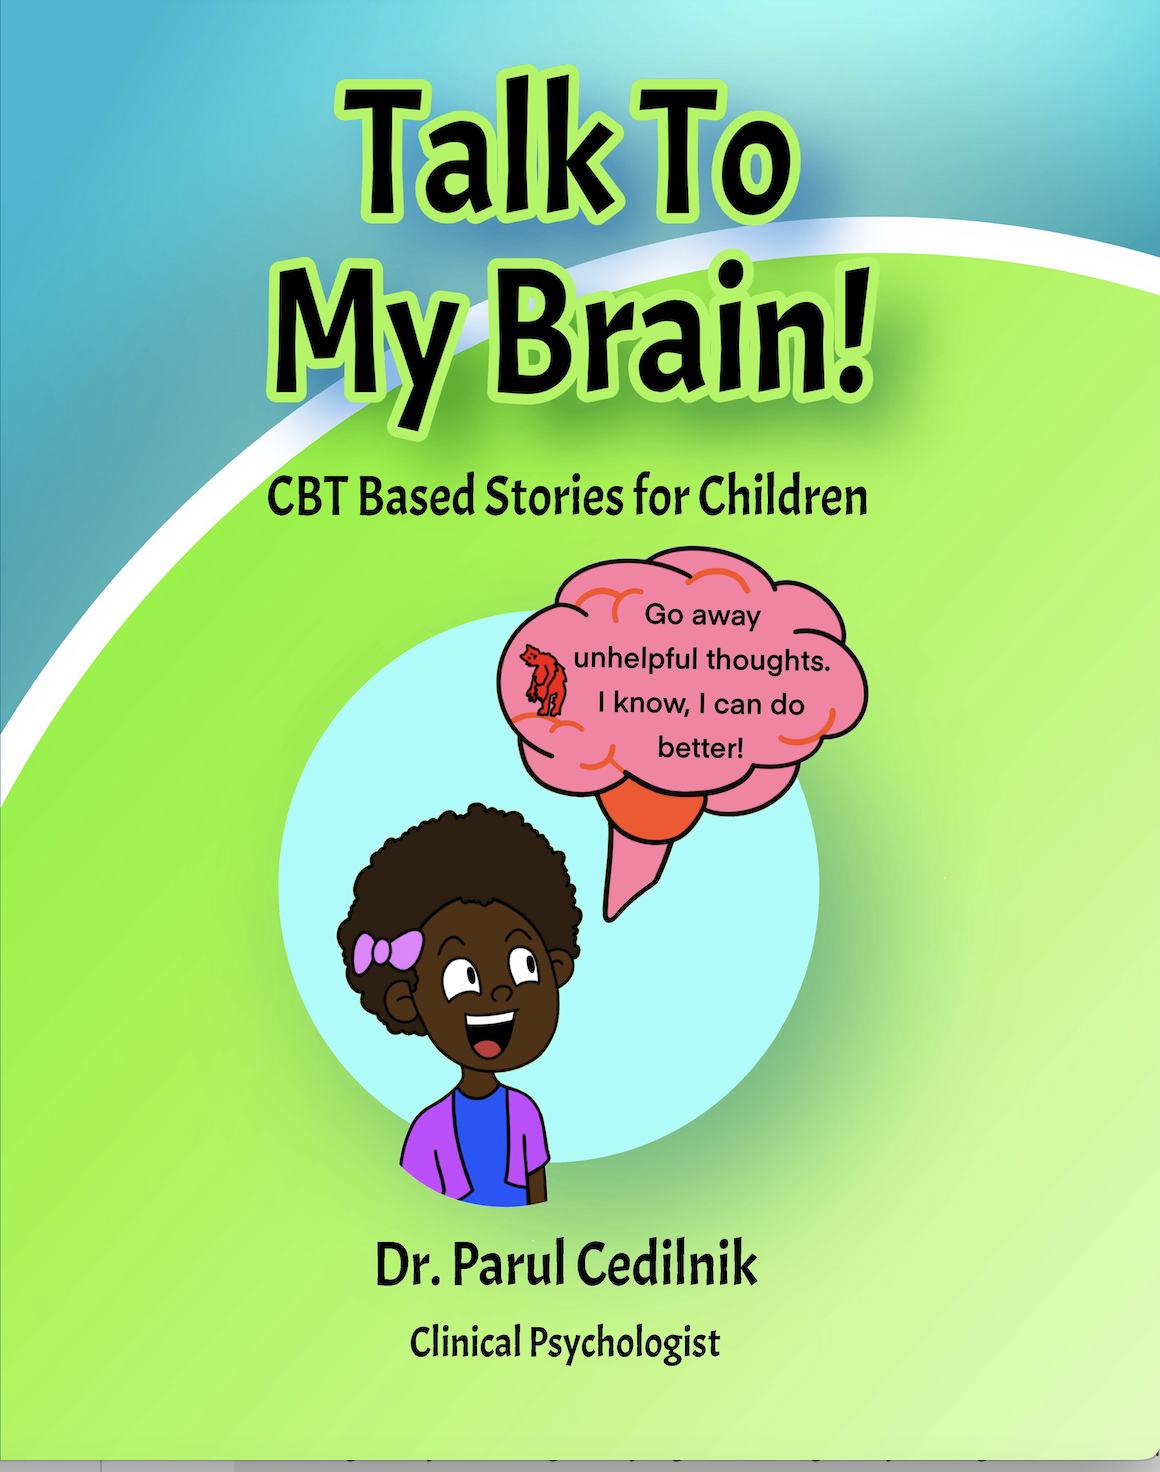 Talk to My Brain! by Dr. Parul Cedilnik